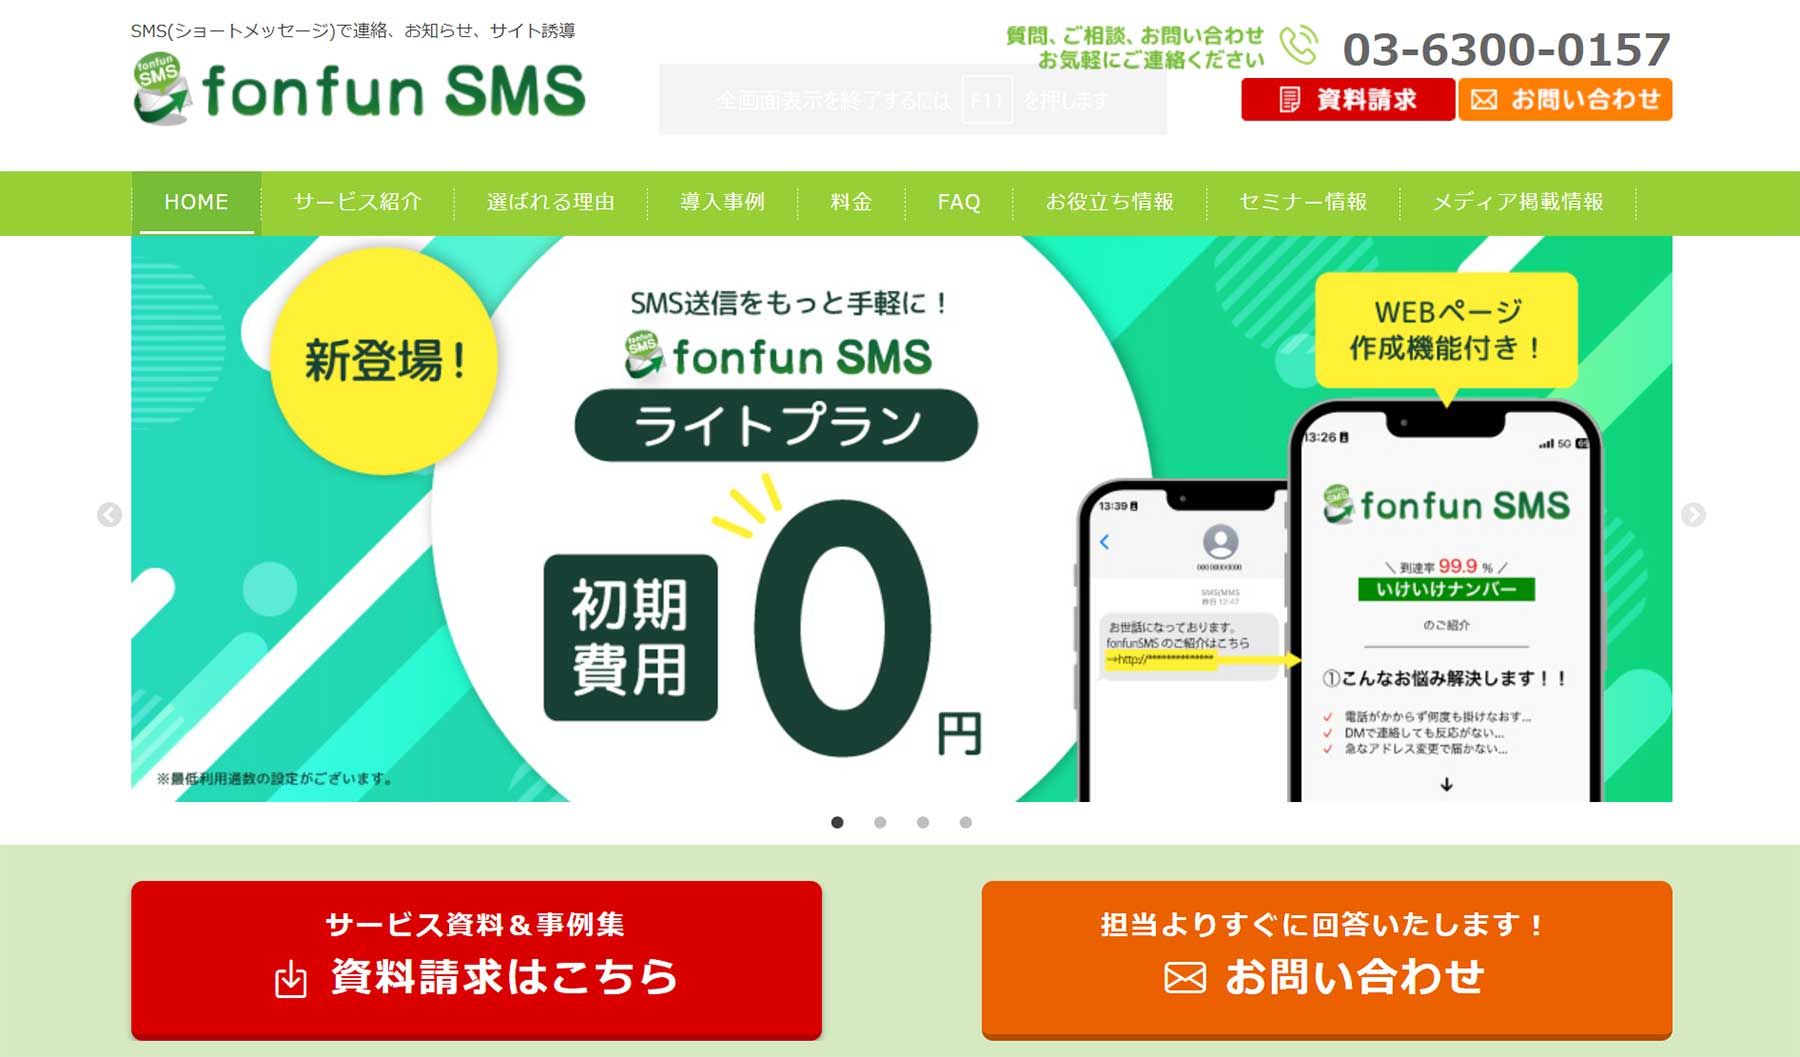 fonfun SMS公式Webサイト